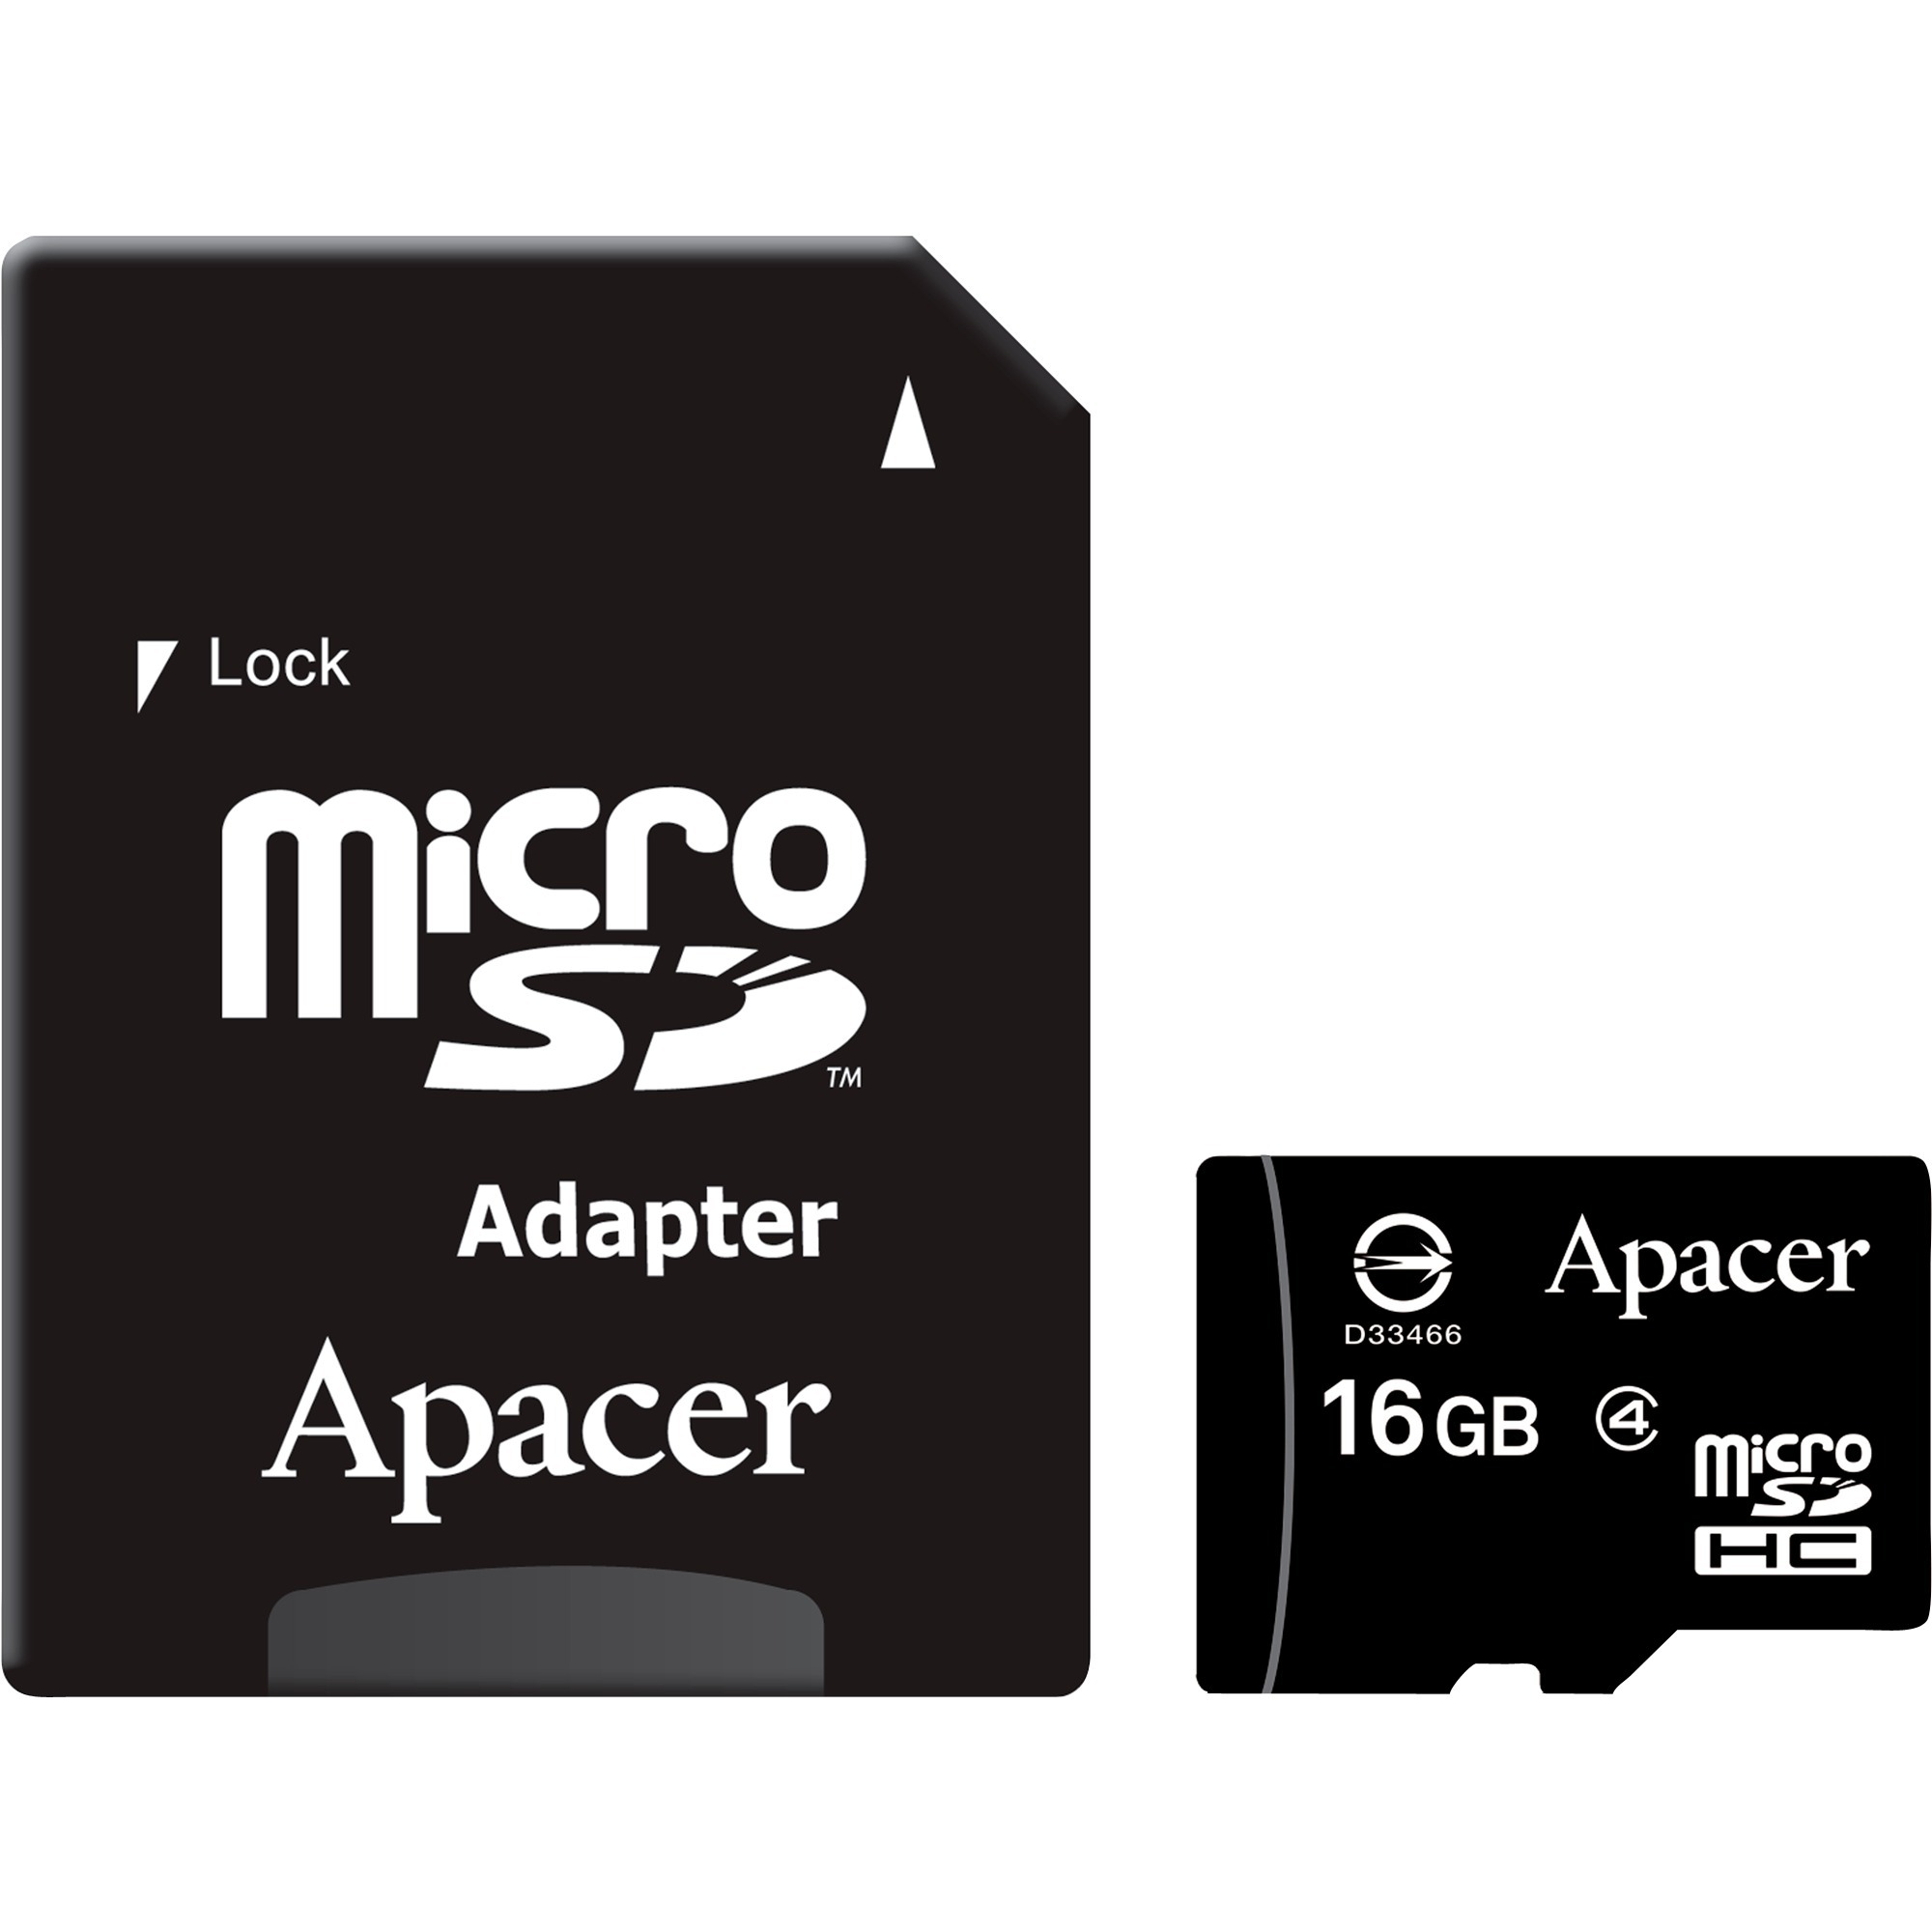 16GB microSDHC Card pamięć flash, Karty pamięci